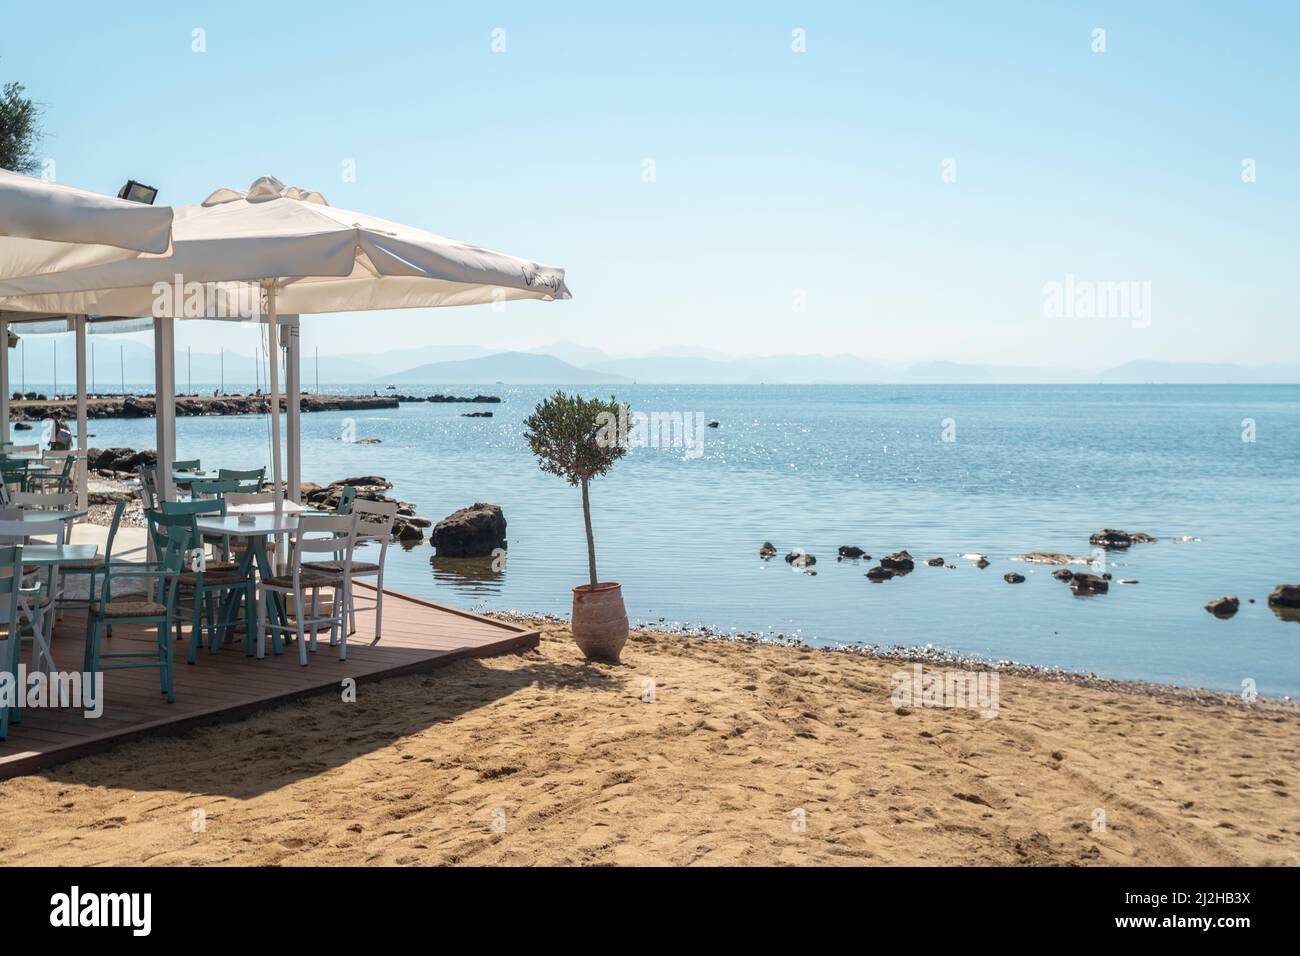 Greece, Corfu island, Restaurant on sandy beach Stock Photo